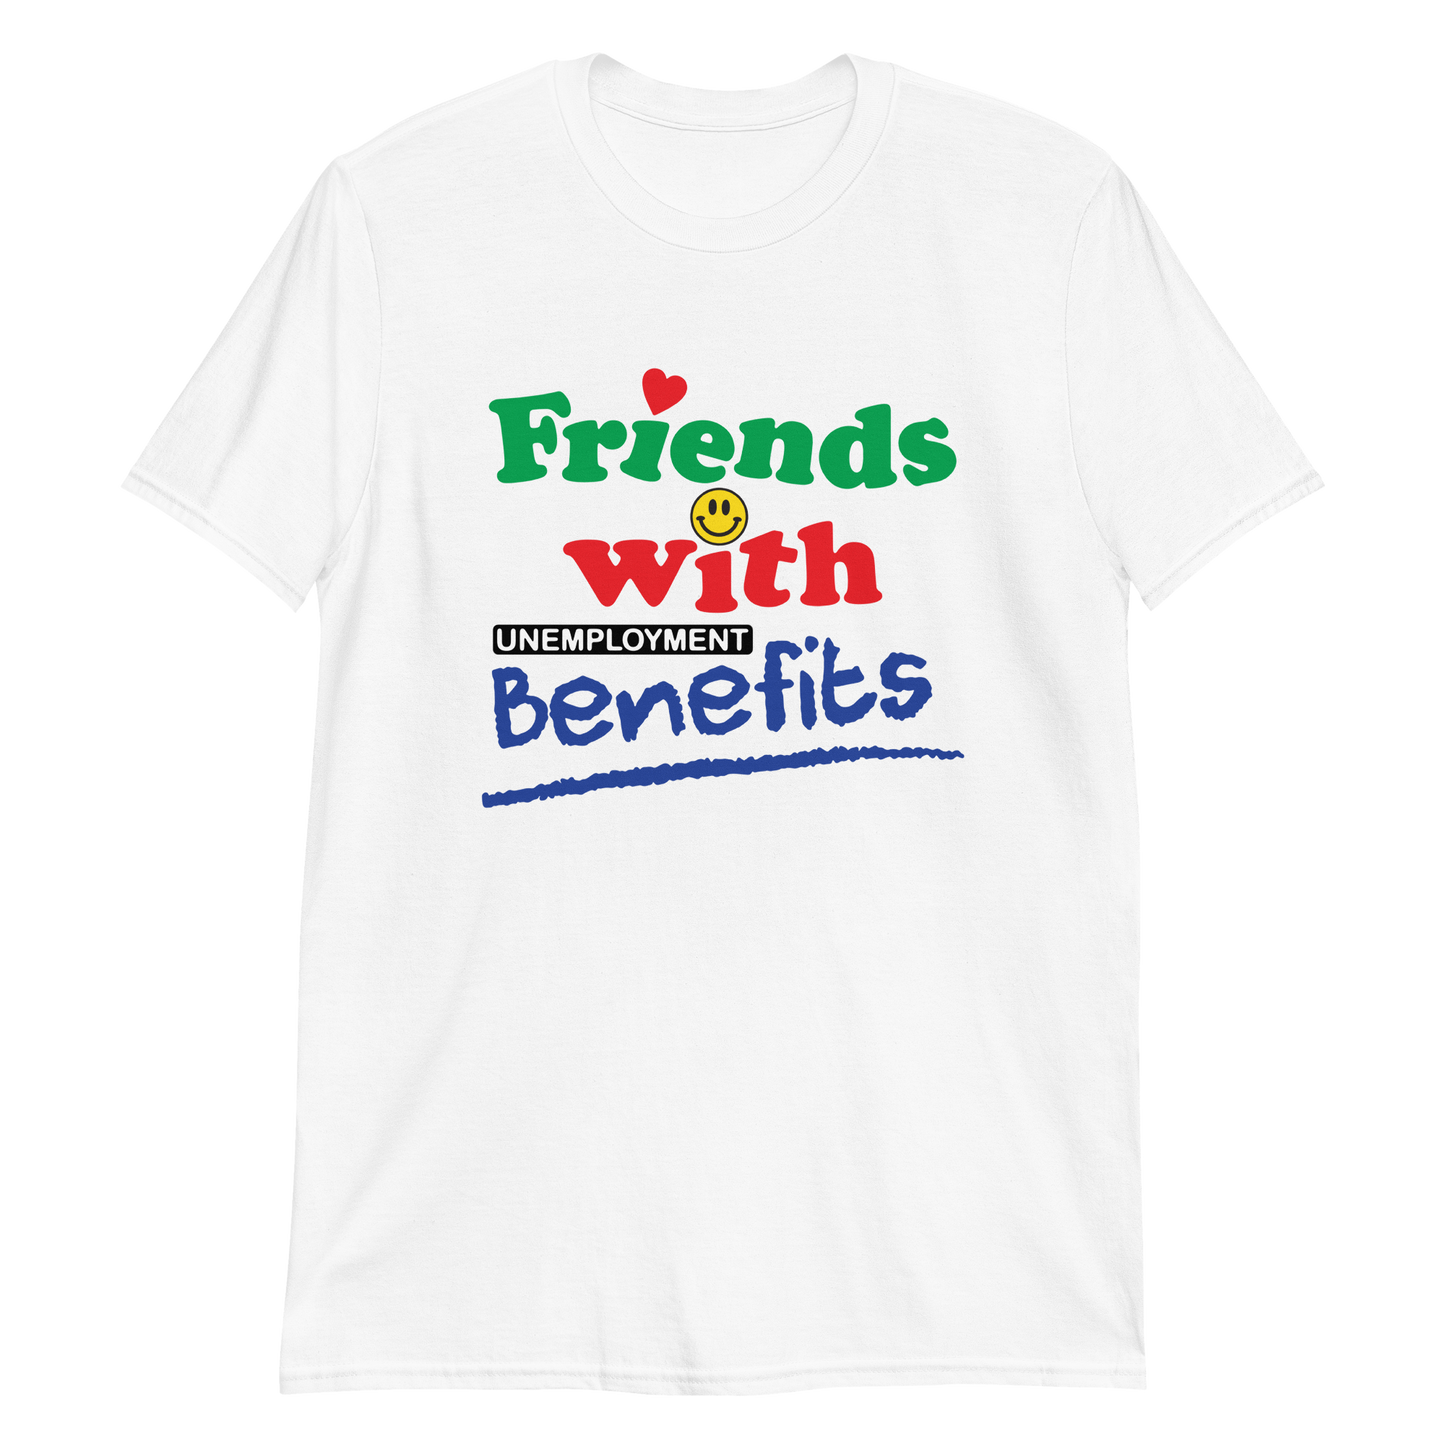 Friends With Unemployment Benefits.